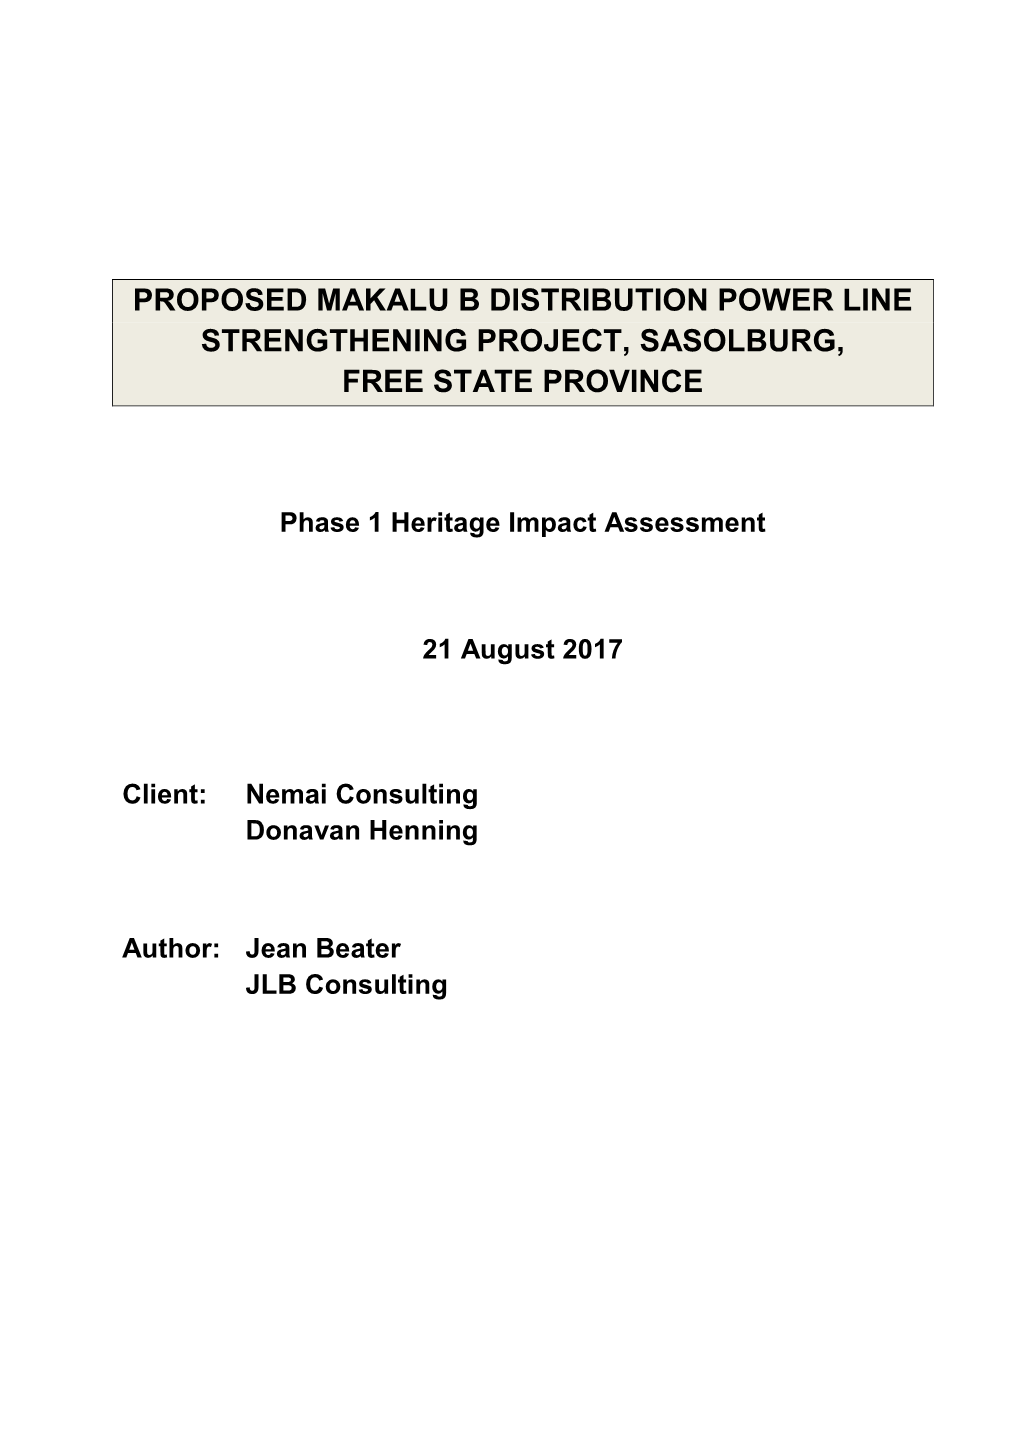 Proposed Makalu B Distribution Power Line Strengthening Project, Sasolburg, Free State Province